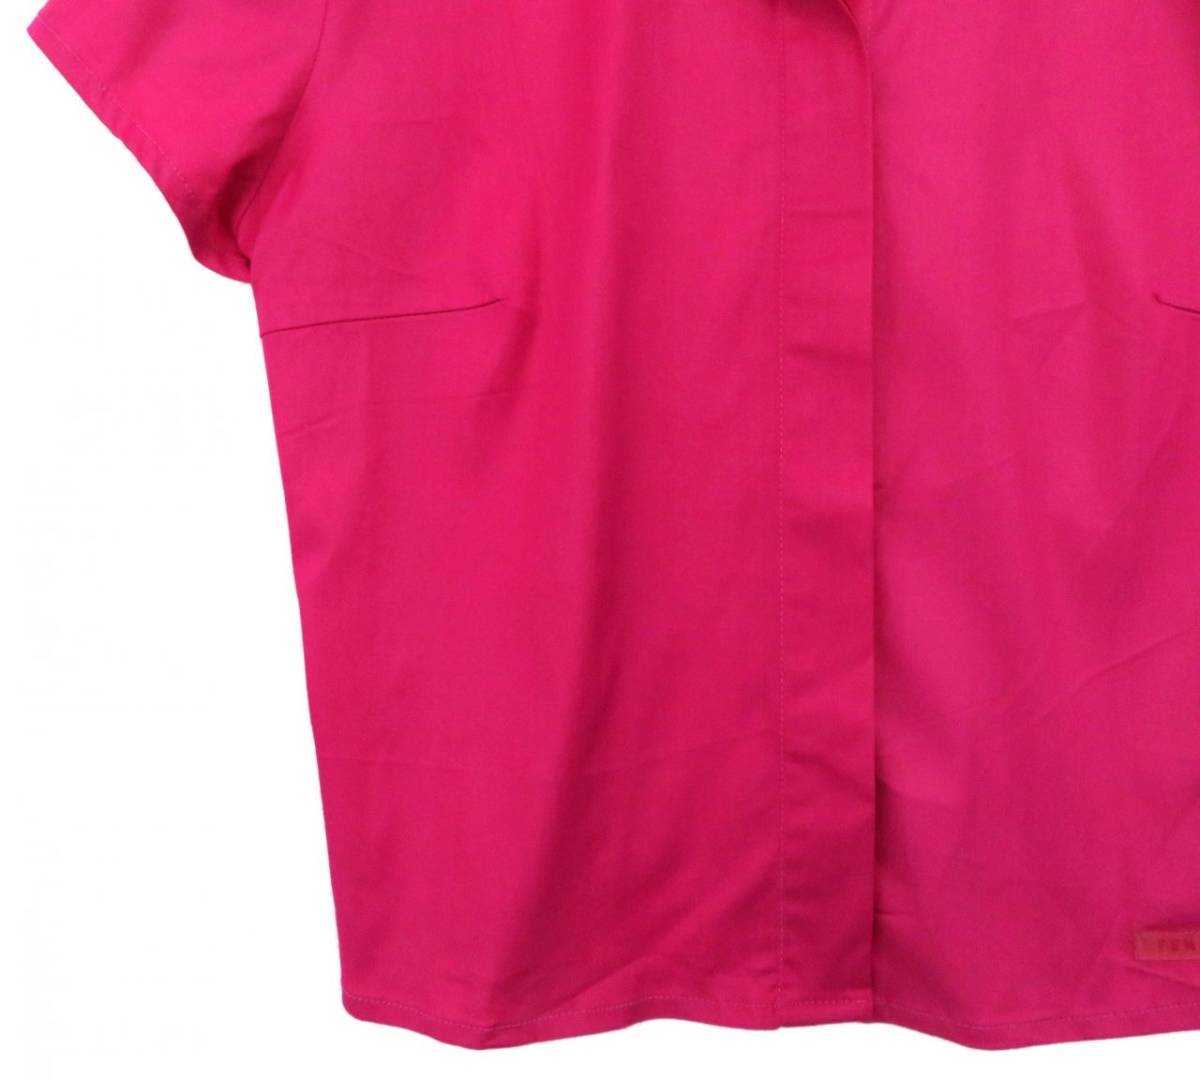 3589 beautiful goods FENDI Fendi stretch short sleeves shirt blouse Italy made 42 pink rare color Vintage kala Full color 